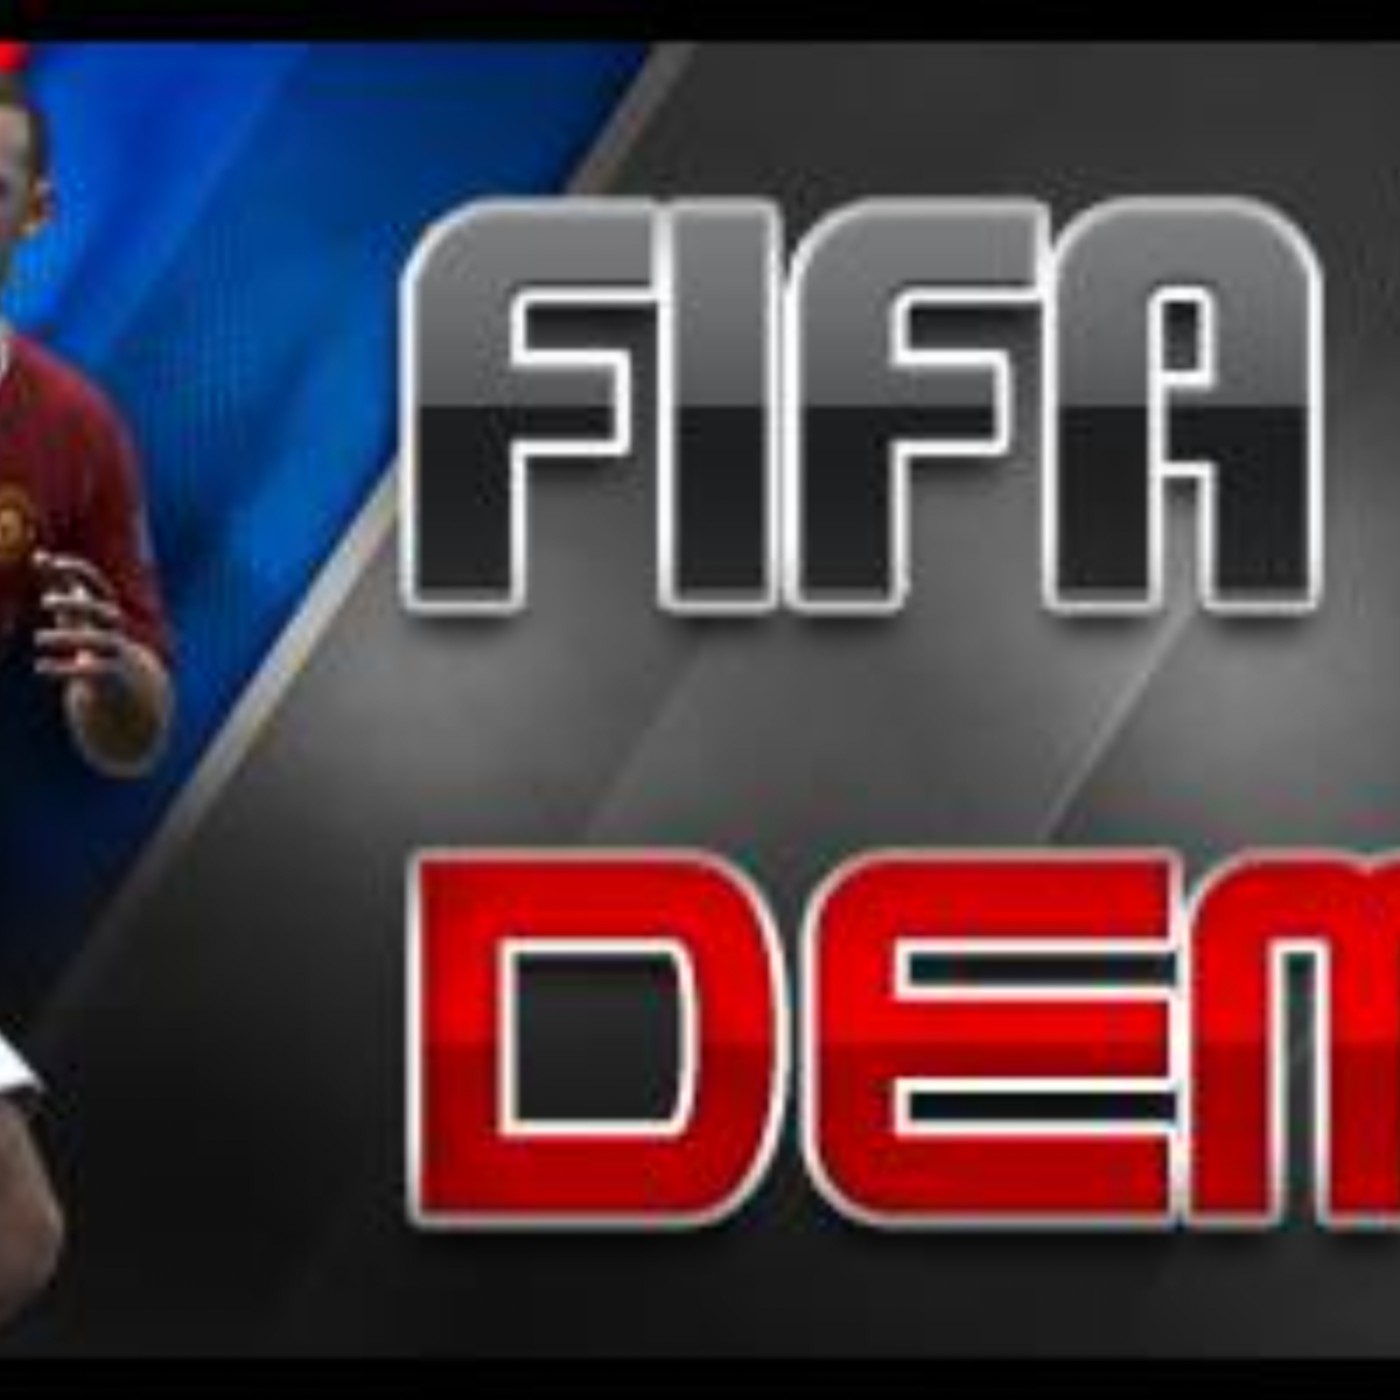 FIFA 12 - Download